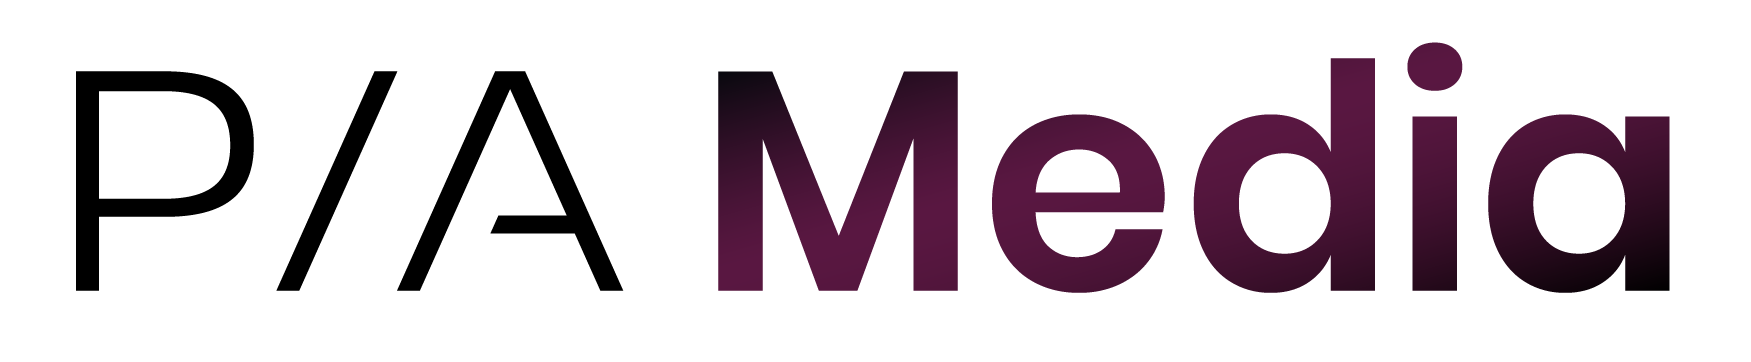 PIA Media MUC GmbH